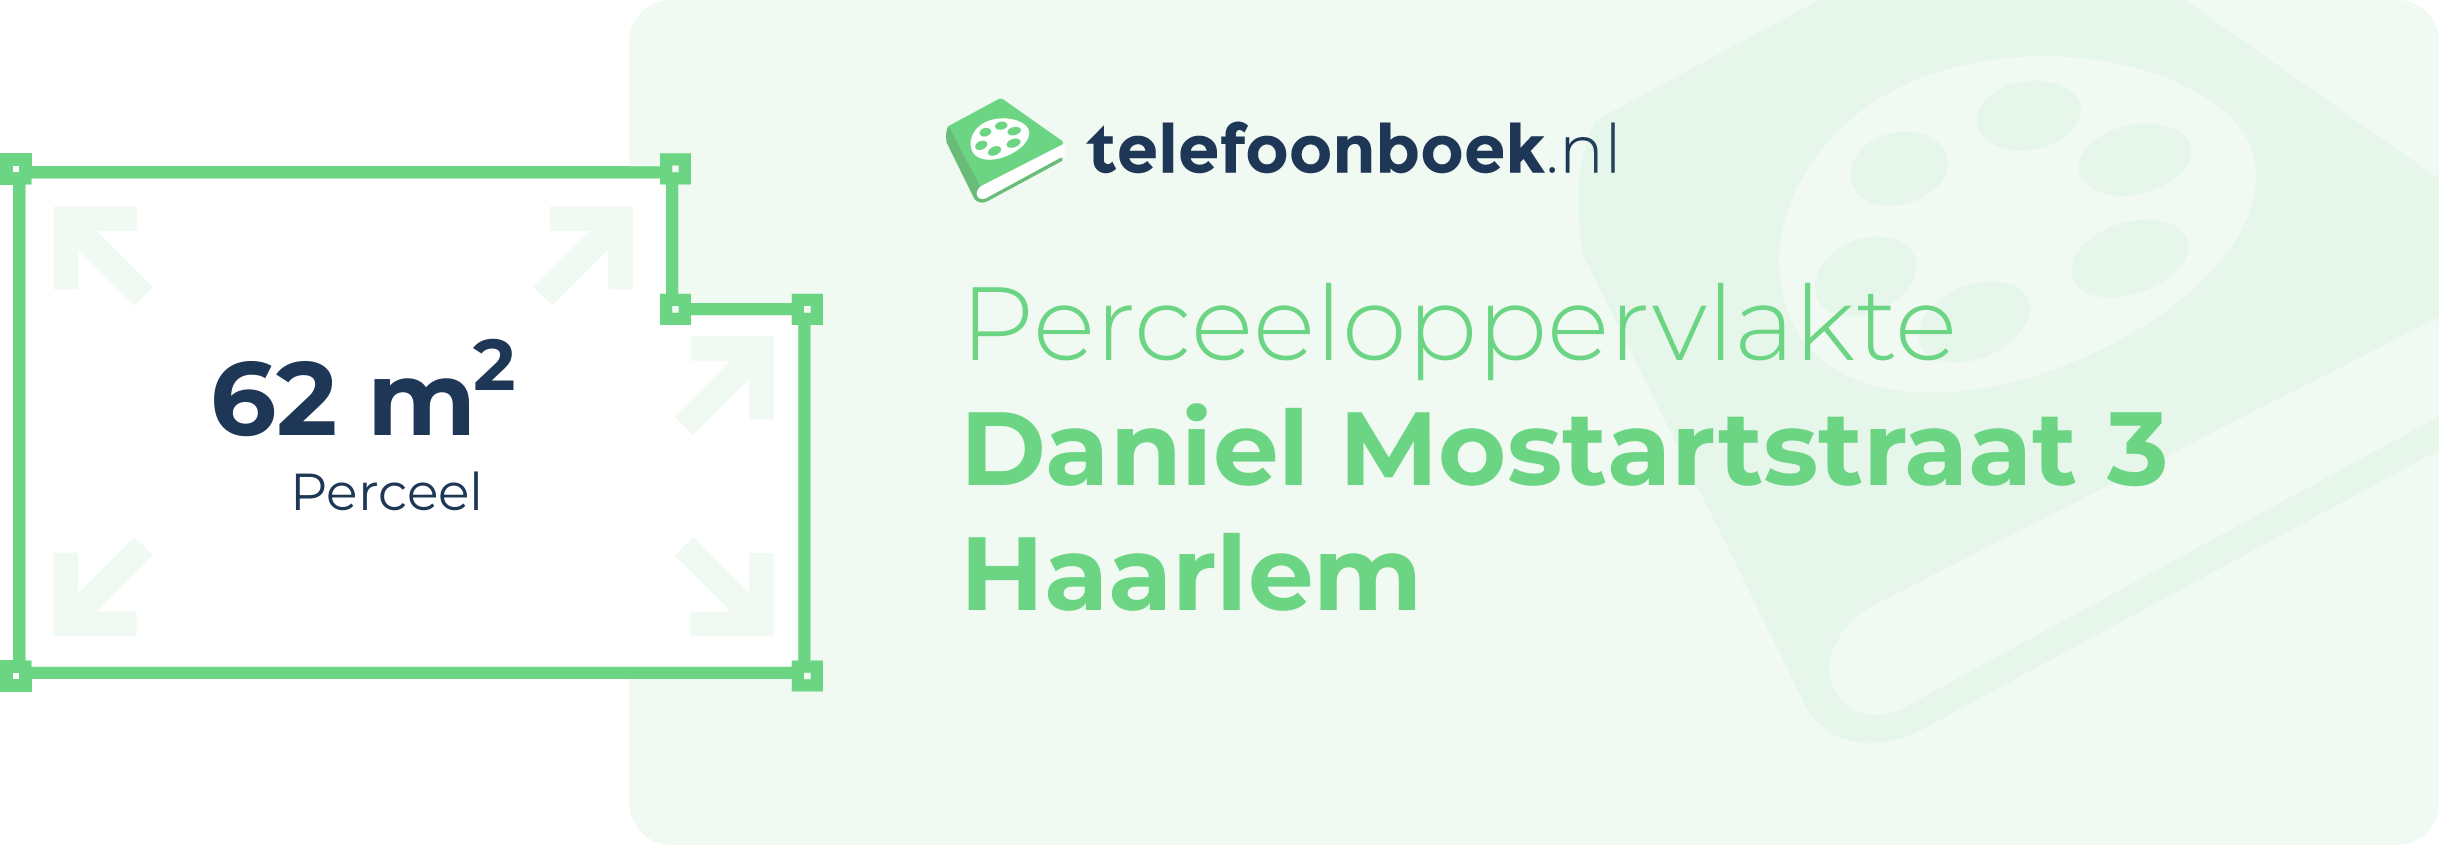 Perceeloppervlakte Daniel Mostartstraat 3 Haarlem